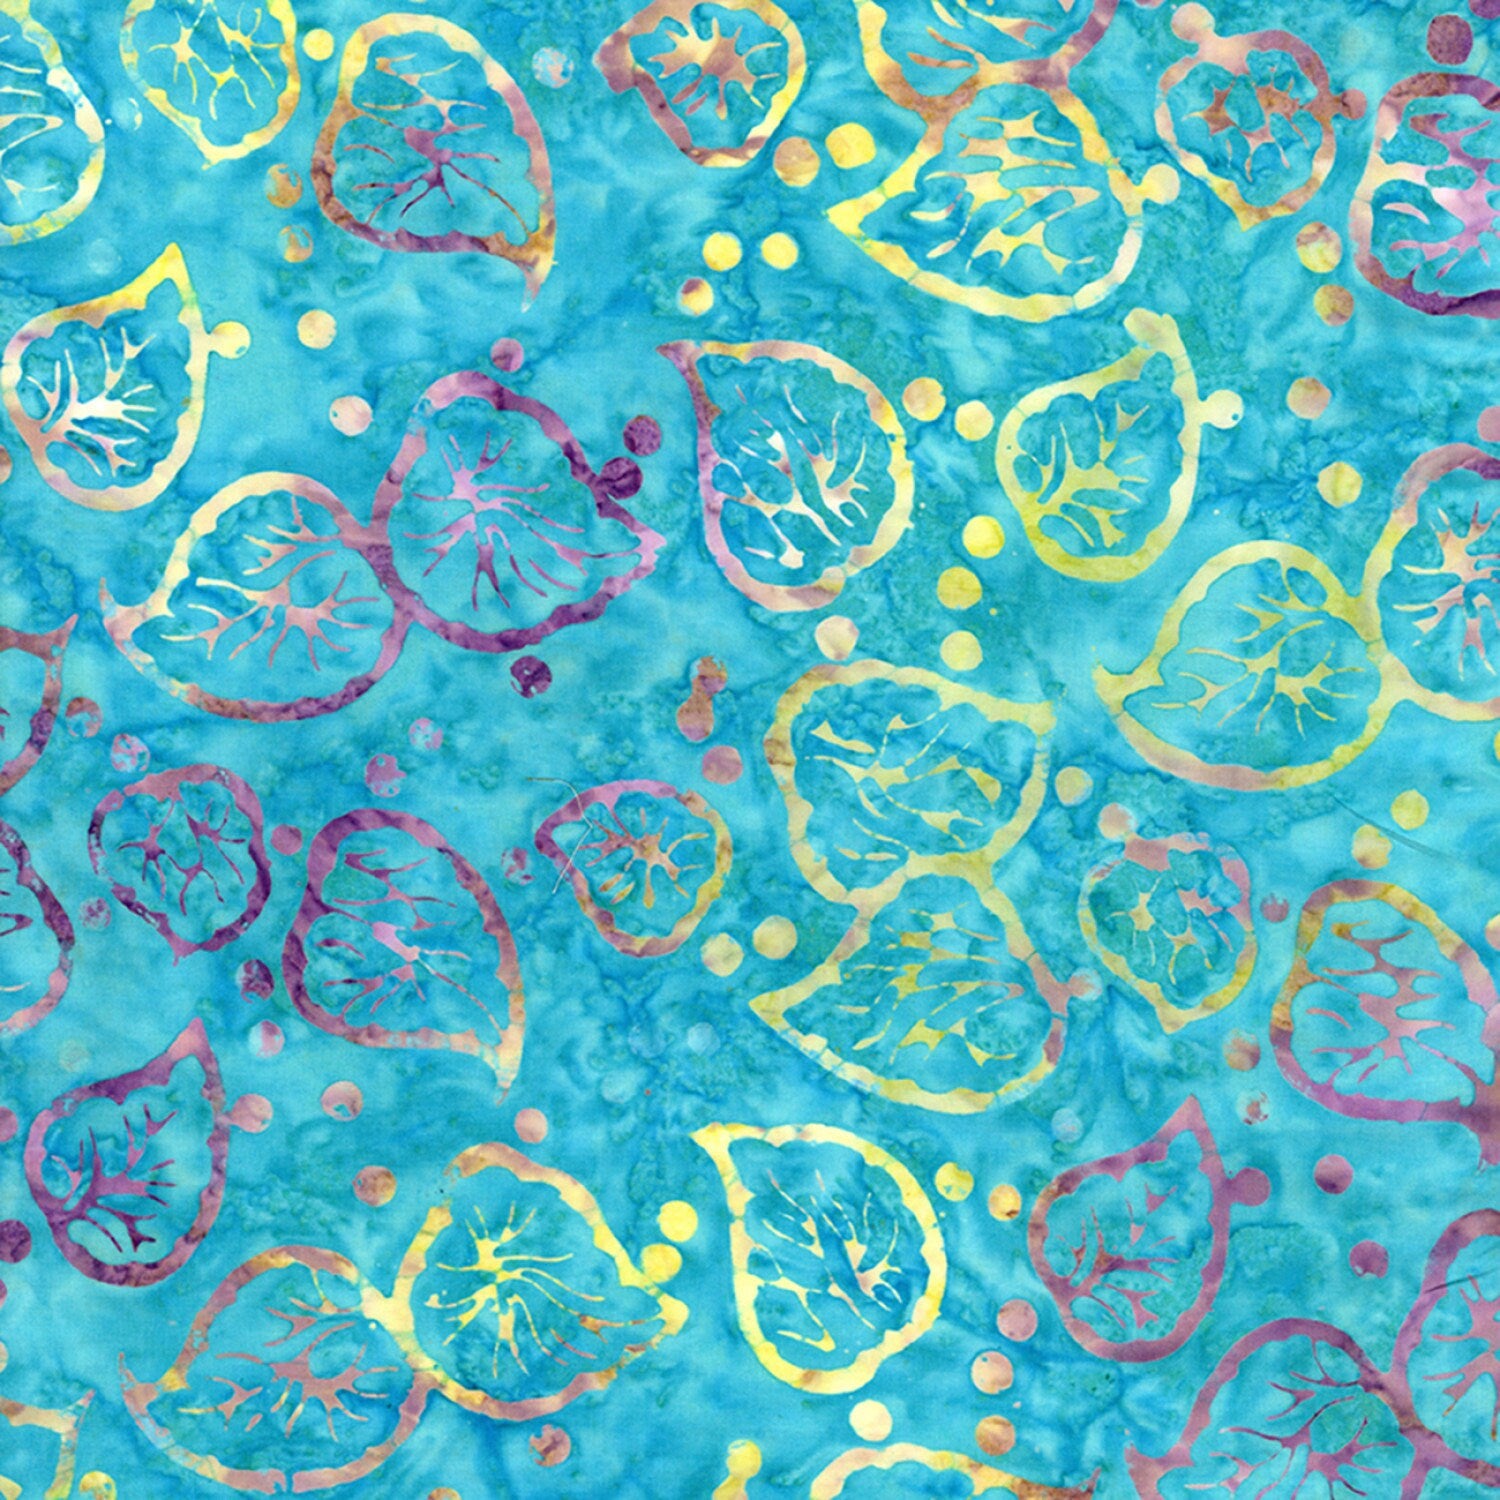 Splash Batik 10" Squares, Timeless Treasures Treat-Square42 Splash, Blue Yellow Green Batik Quilt Fabric, 10" Inch Precut Fabric Squares,